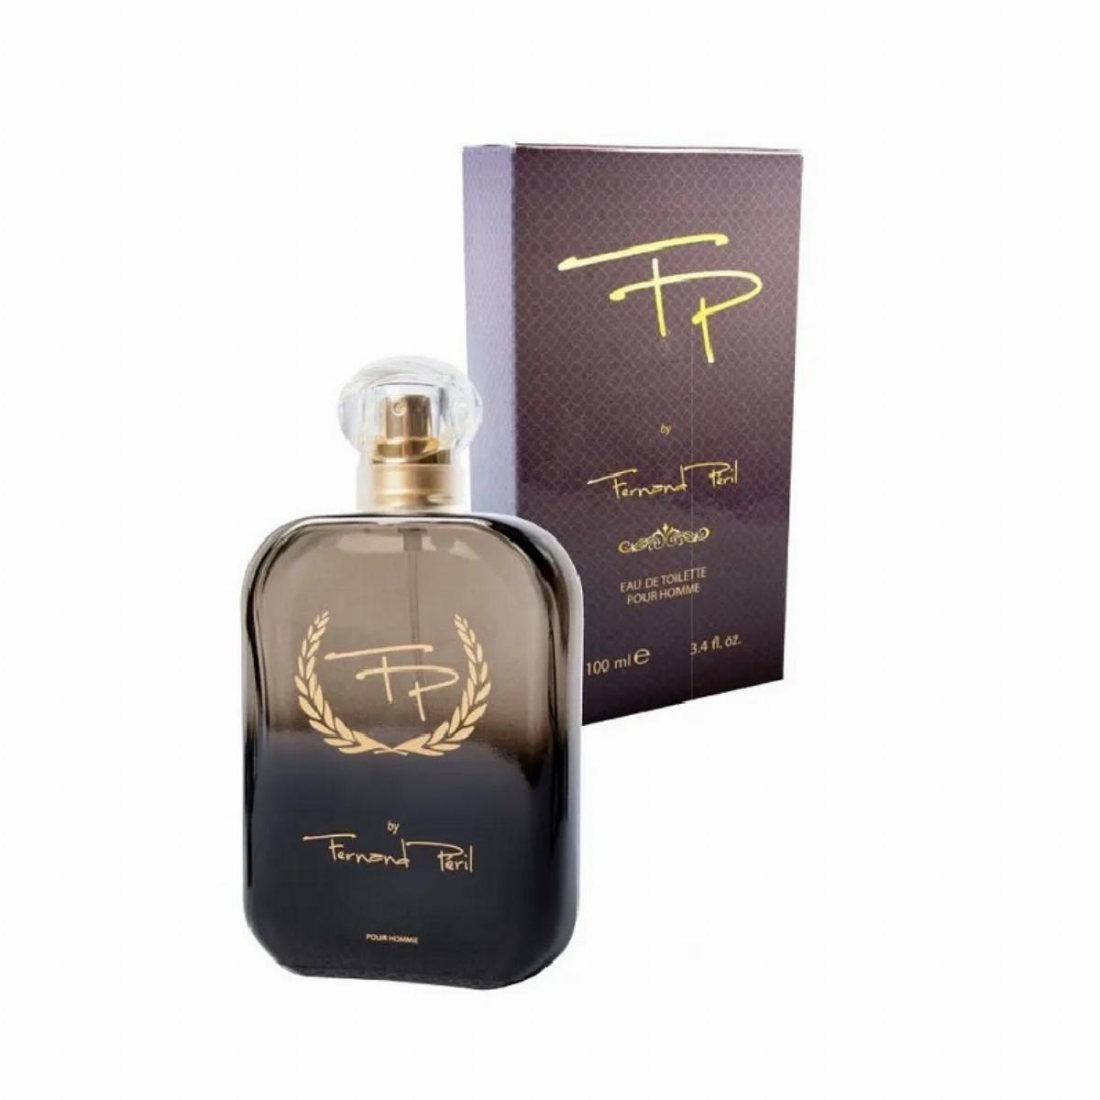 FP by Fernand Péril - Pheromone Perfume Men - 100 ml